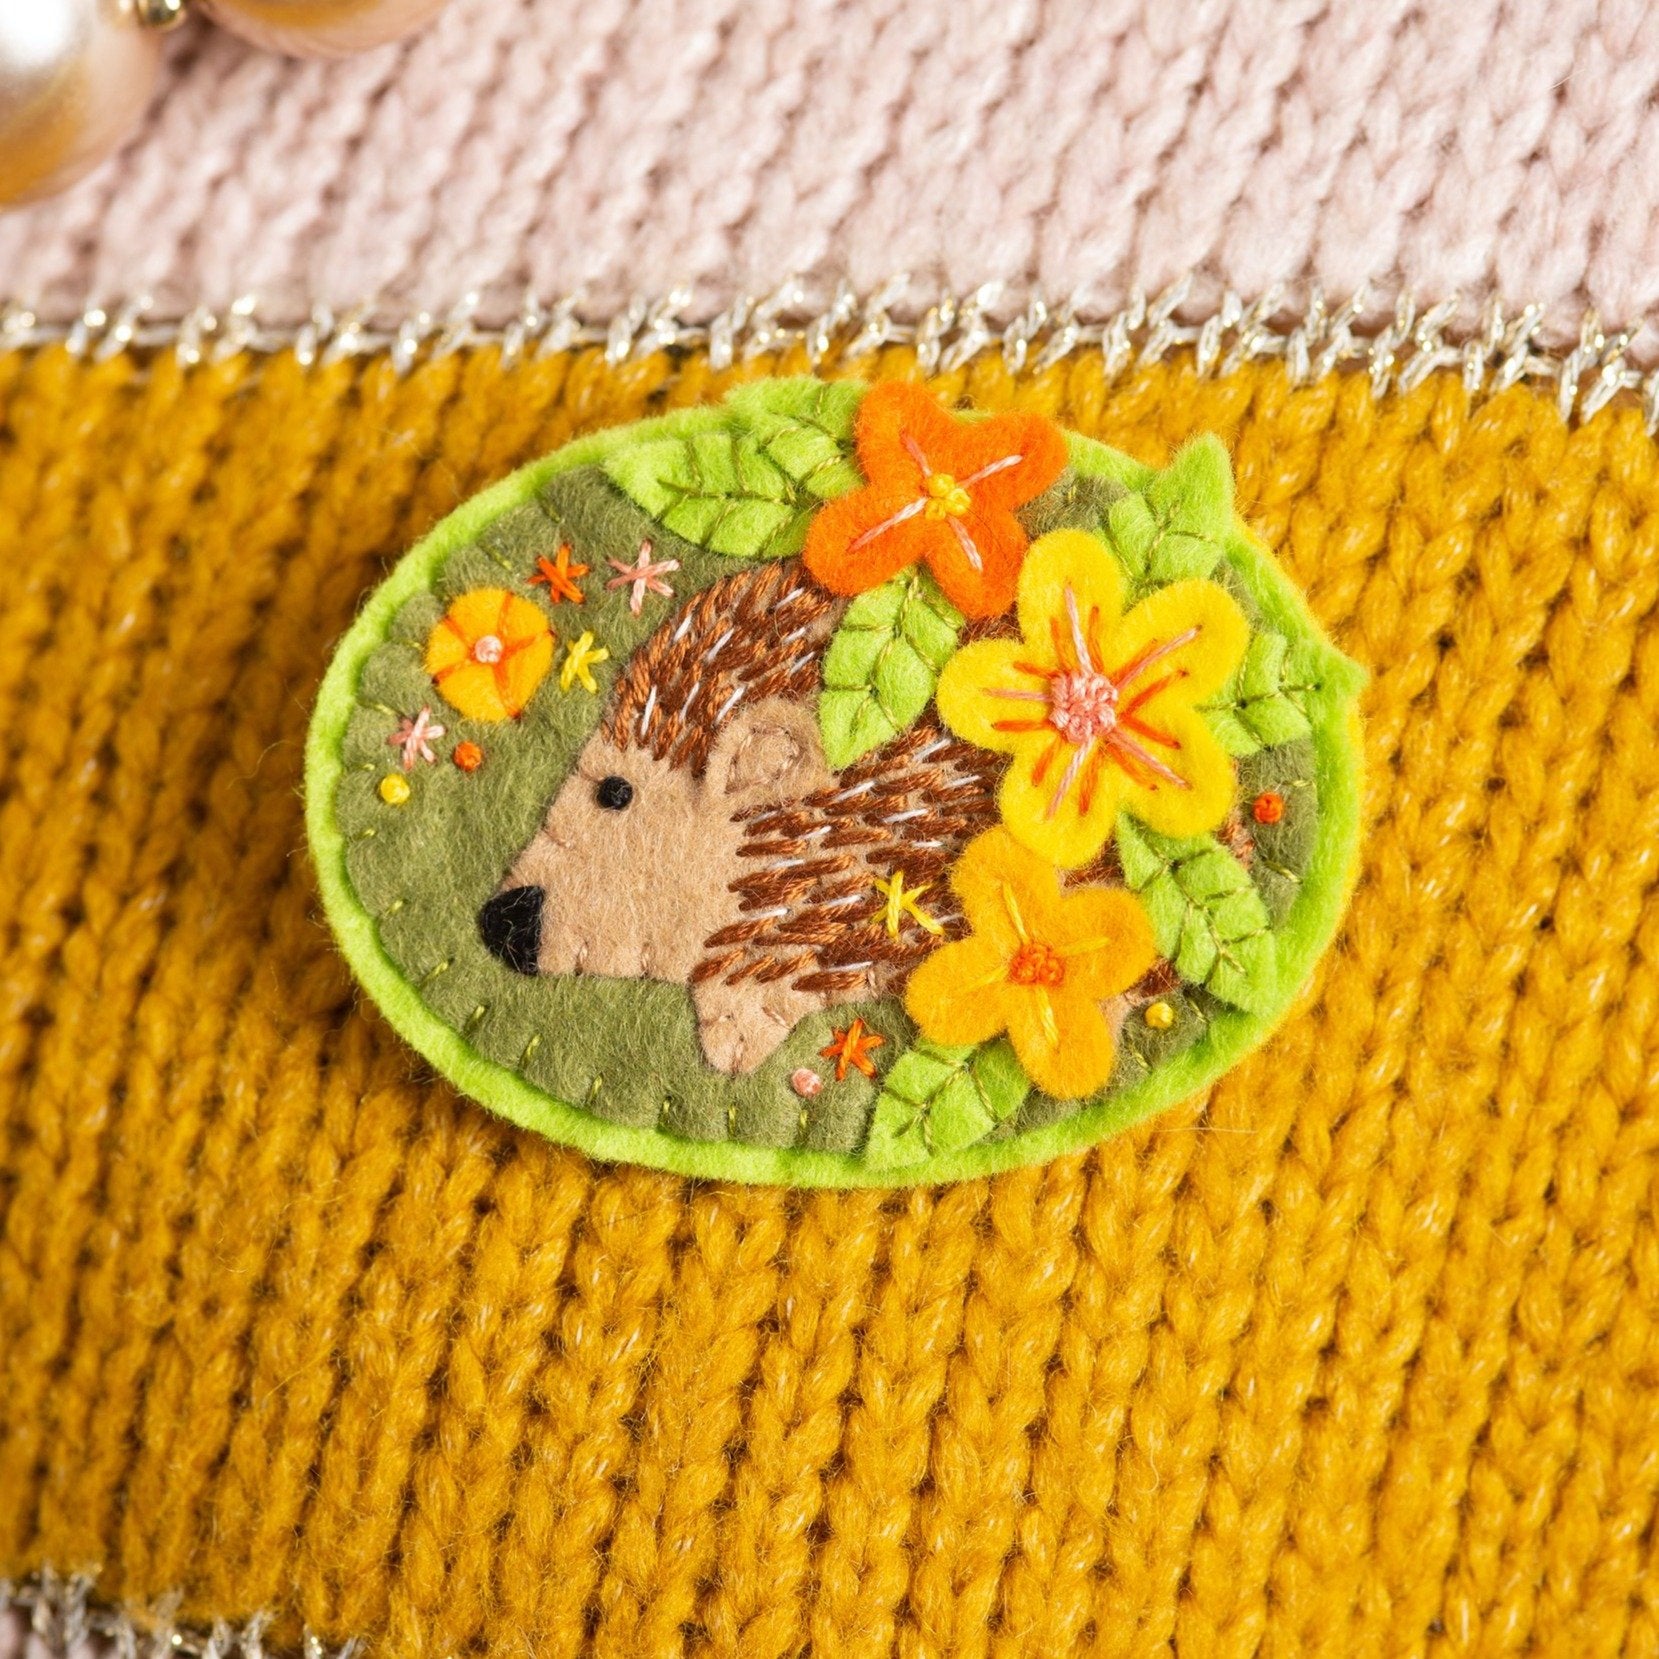 Hedgehog felt brooch worn on mustard and cream coloured knitted jumper